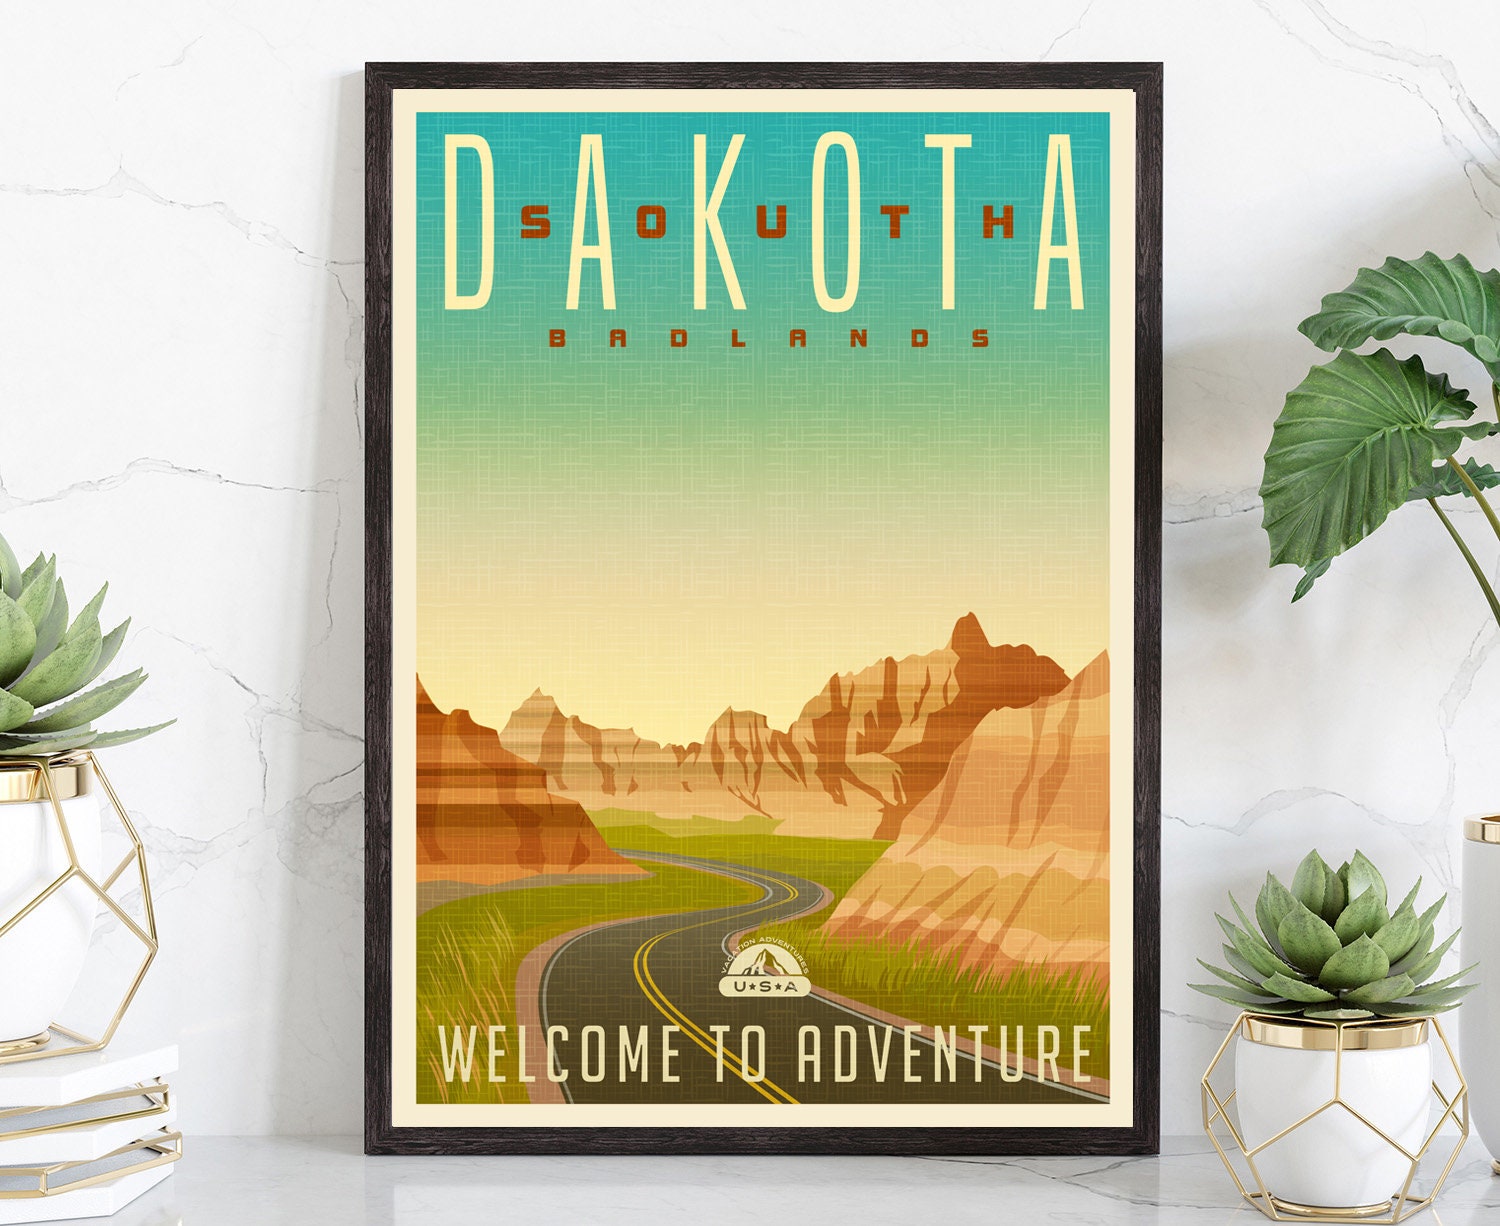 South Dakota Vintage Rustic Poster Print, Retro Style Travel Poster